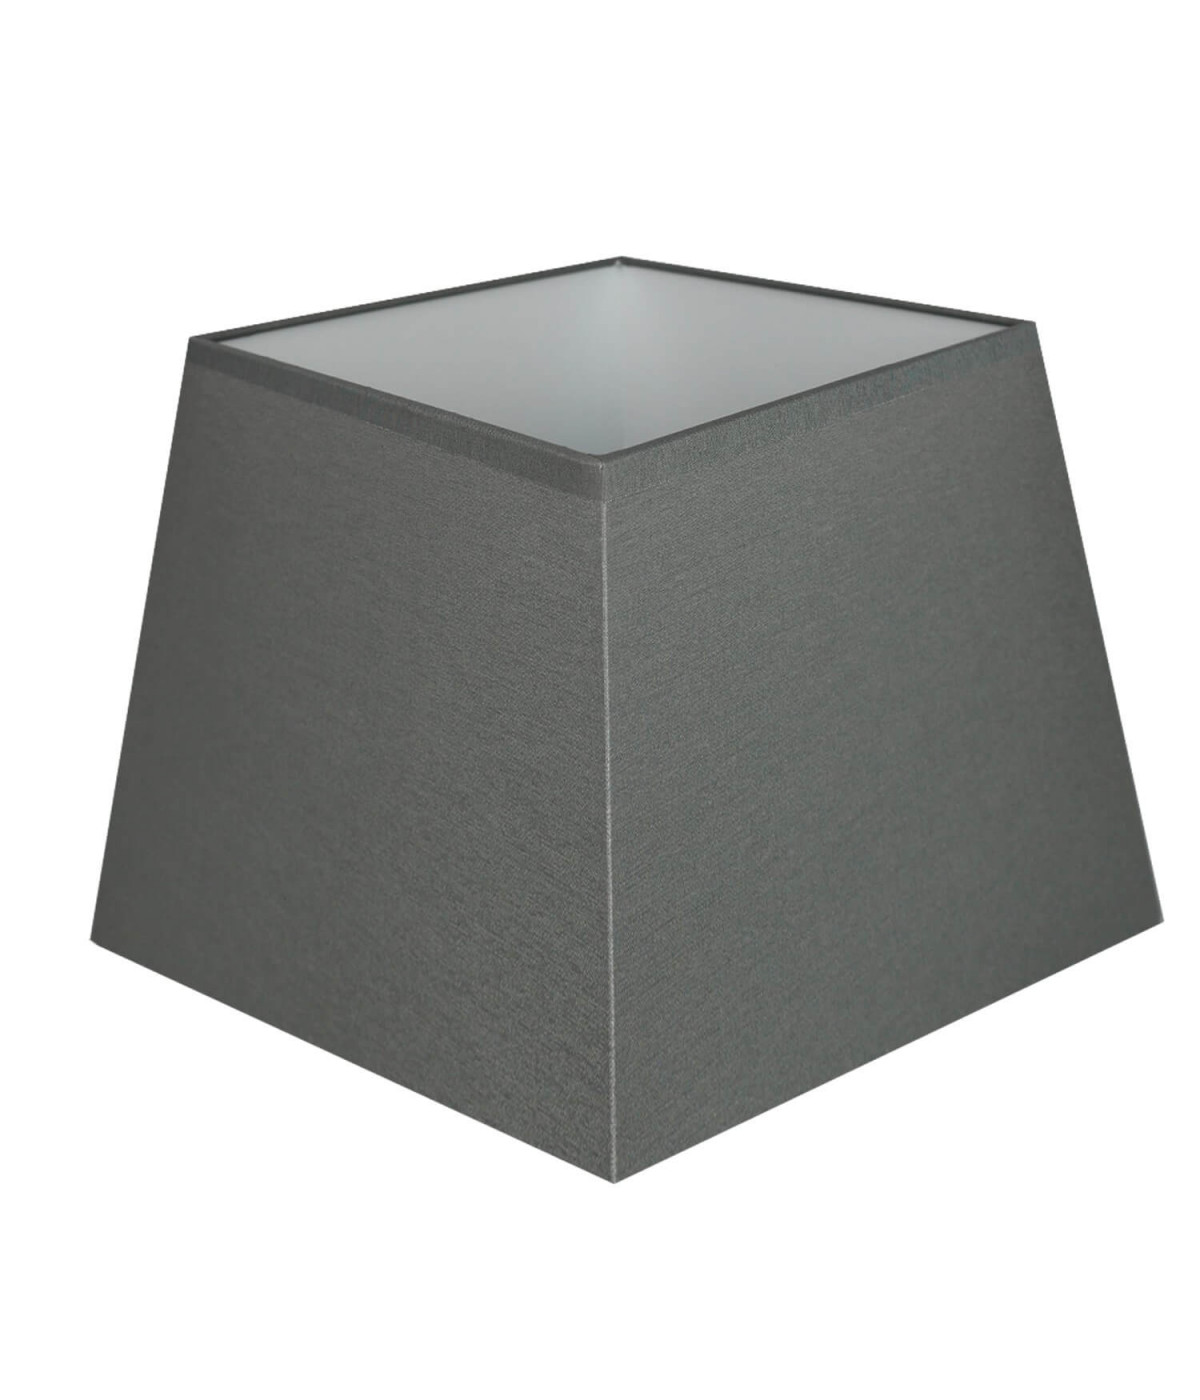 Medium gray pyramidal square shade